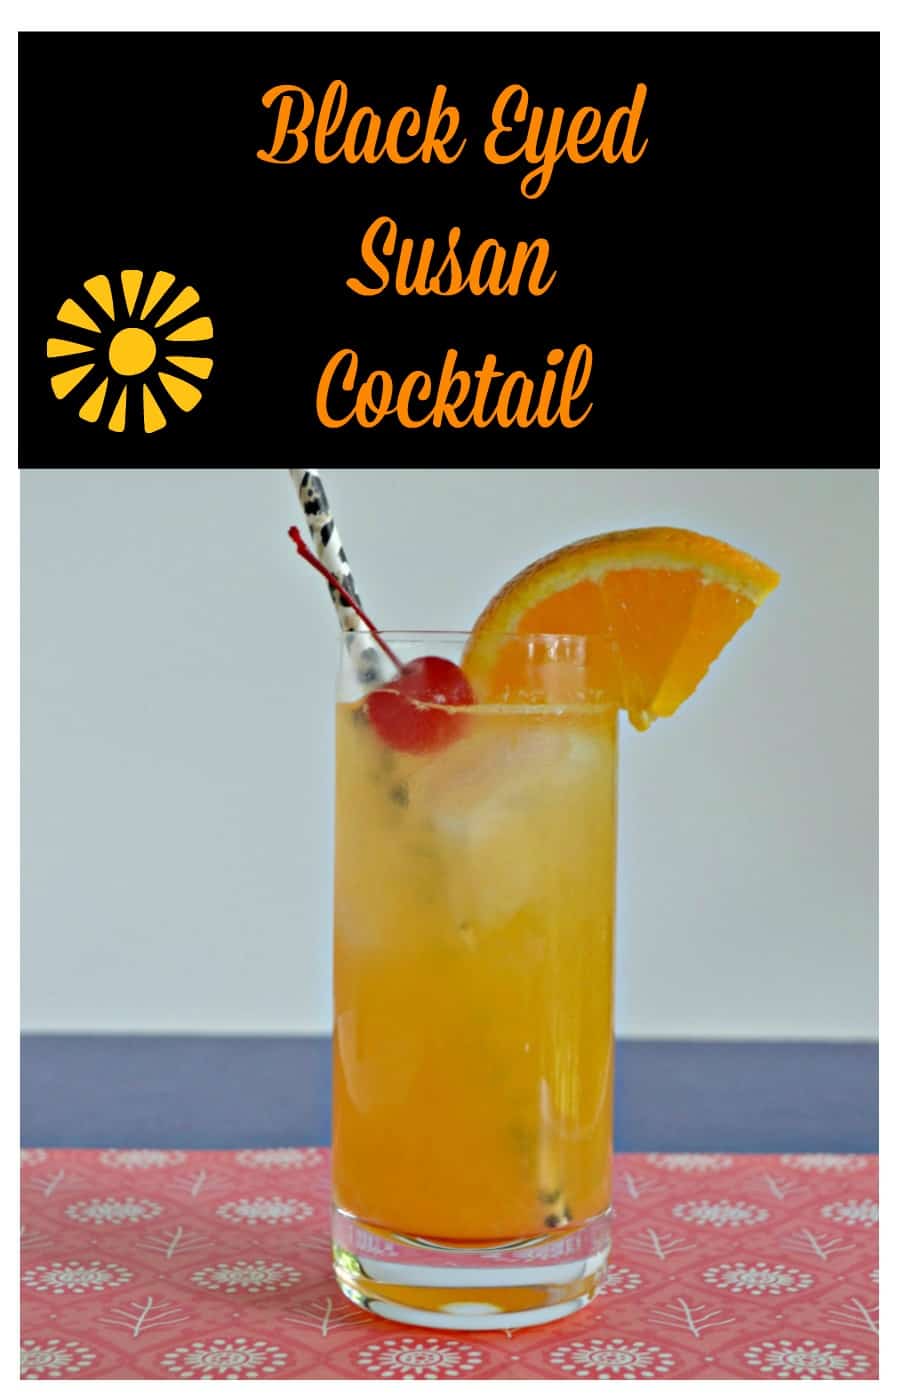 black island Susan cocktail